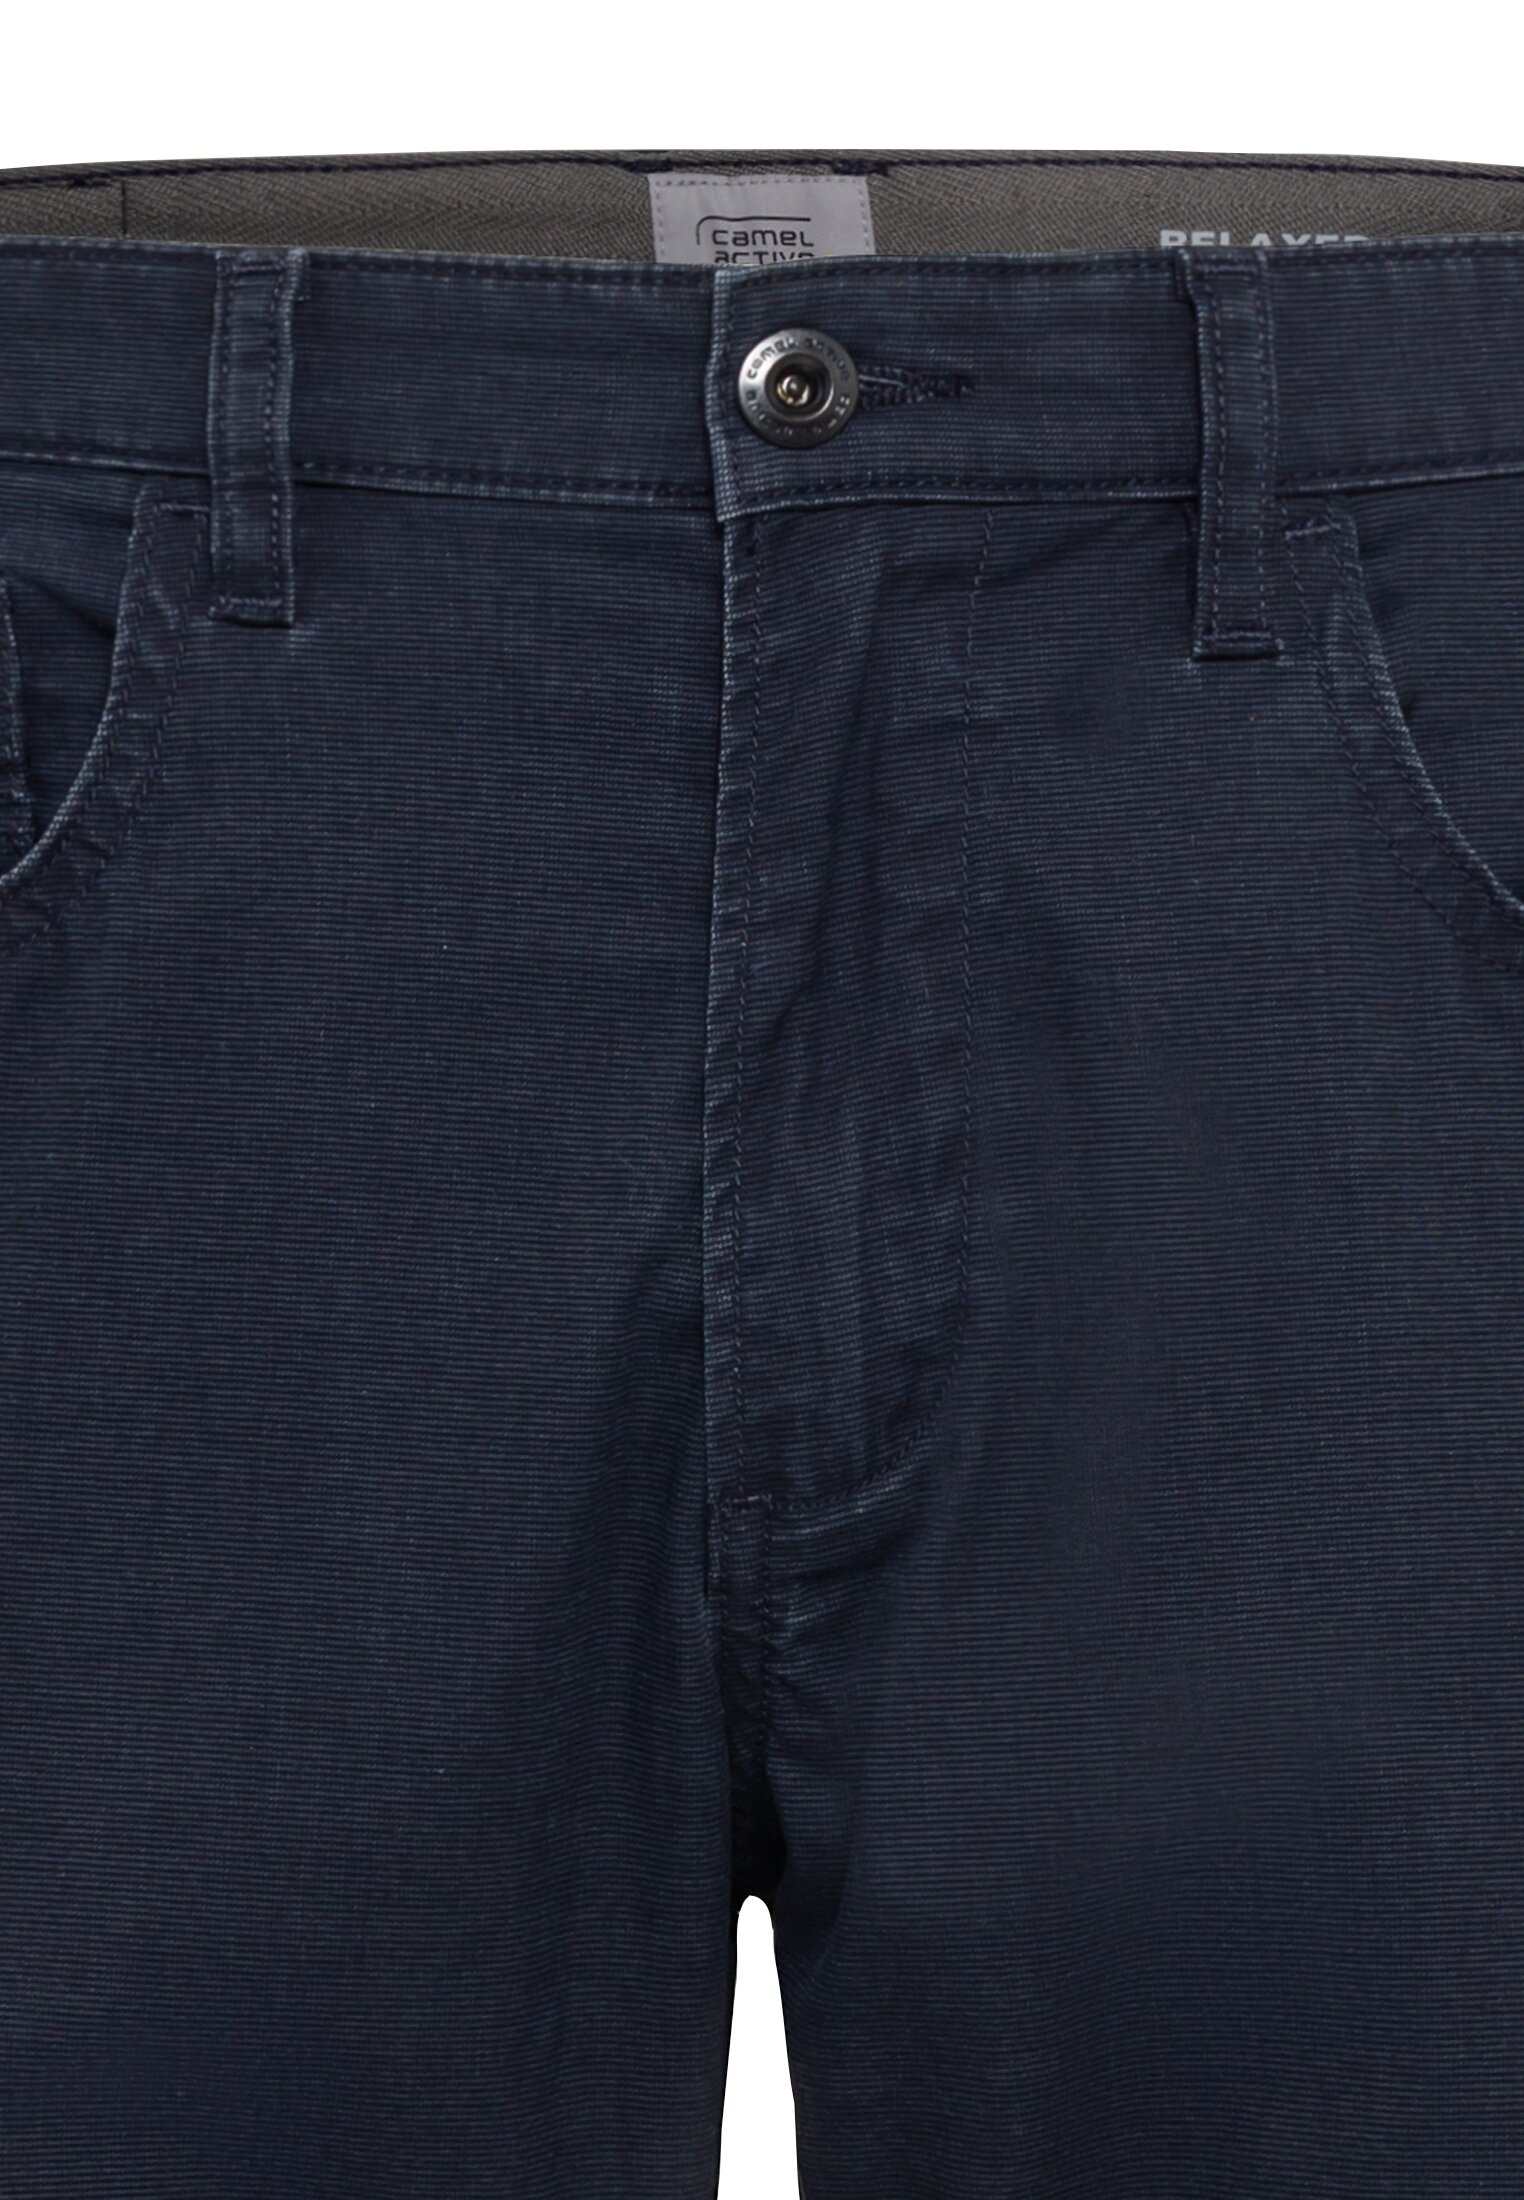 camel active 5-Pocket-Jeans, mit Camel Active Badge auf der Rückseite